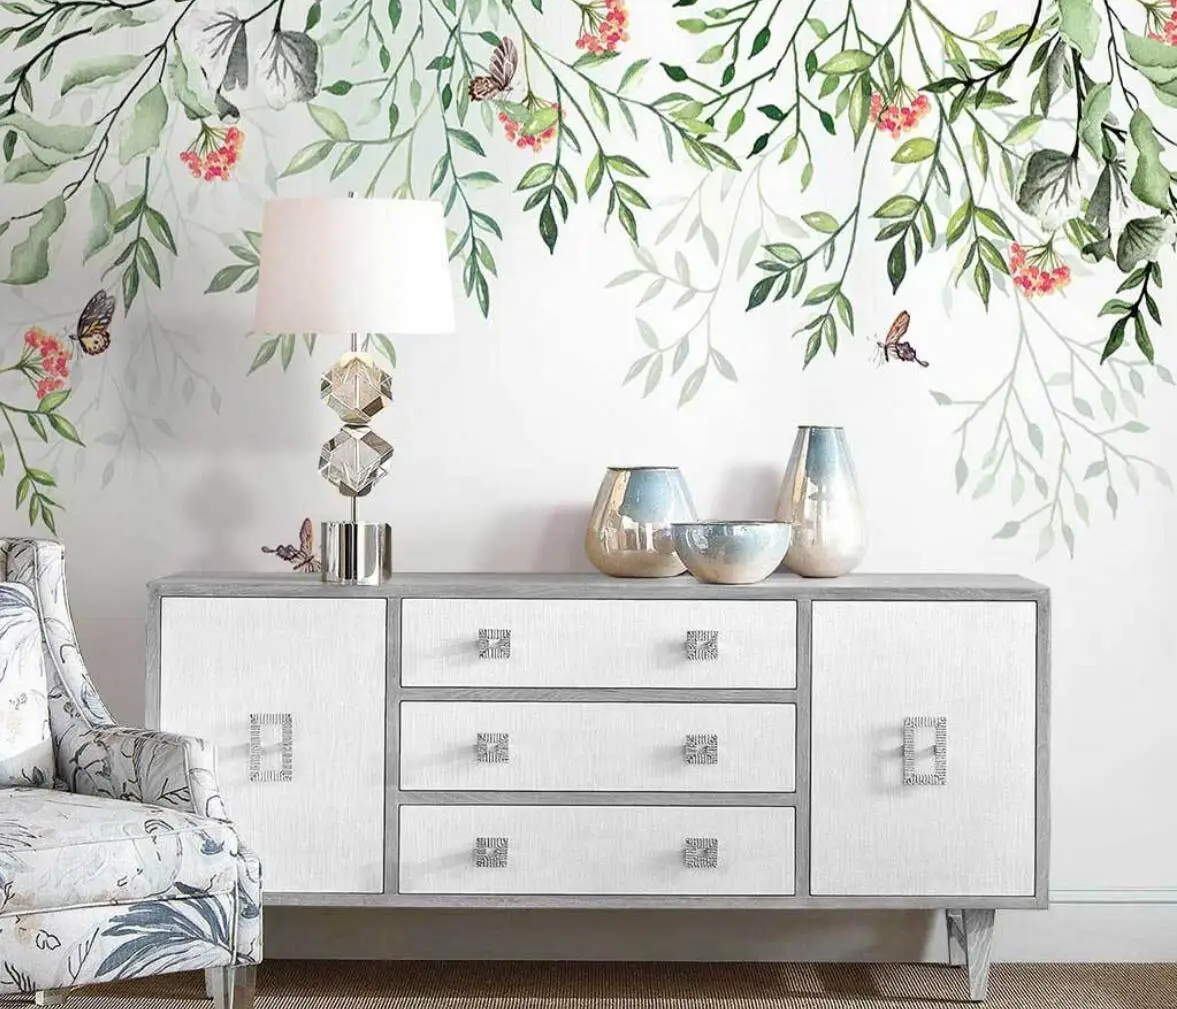 

Custom plant green vine Mural Wallpaper for Wall Paper Home Decor wallpapers for Living Room Fashionable Interior Design Fresco